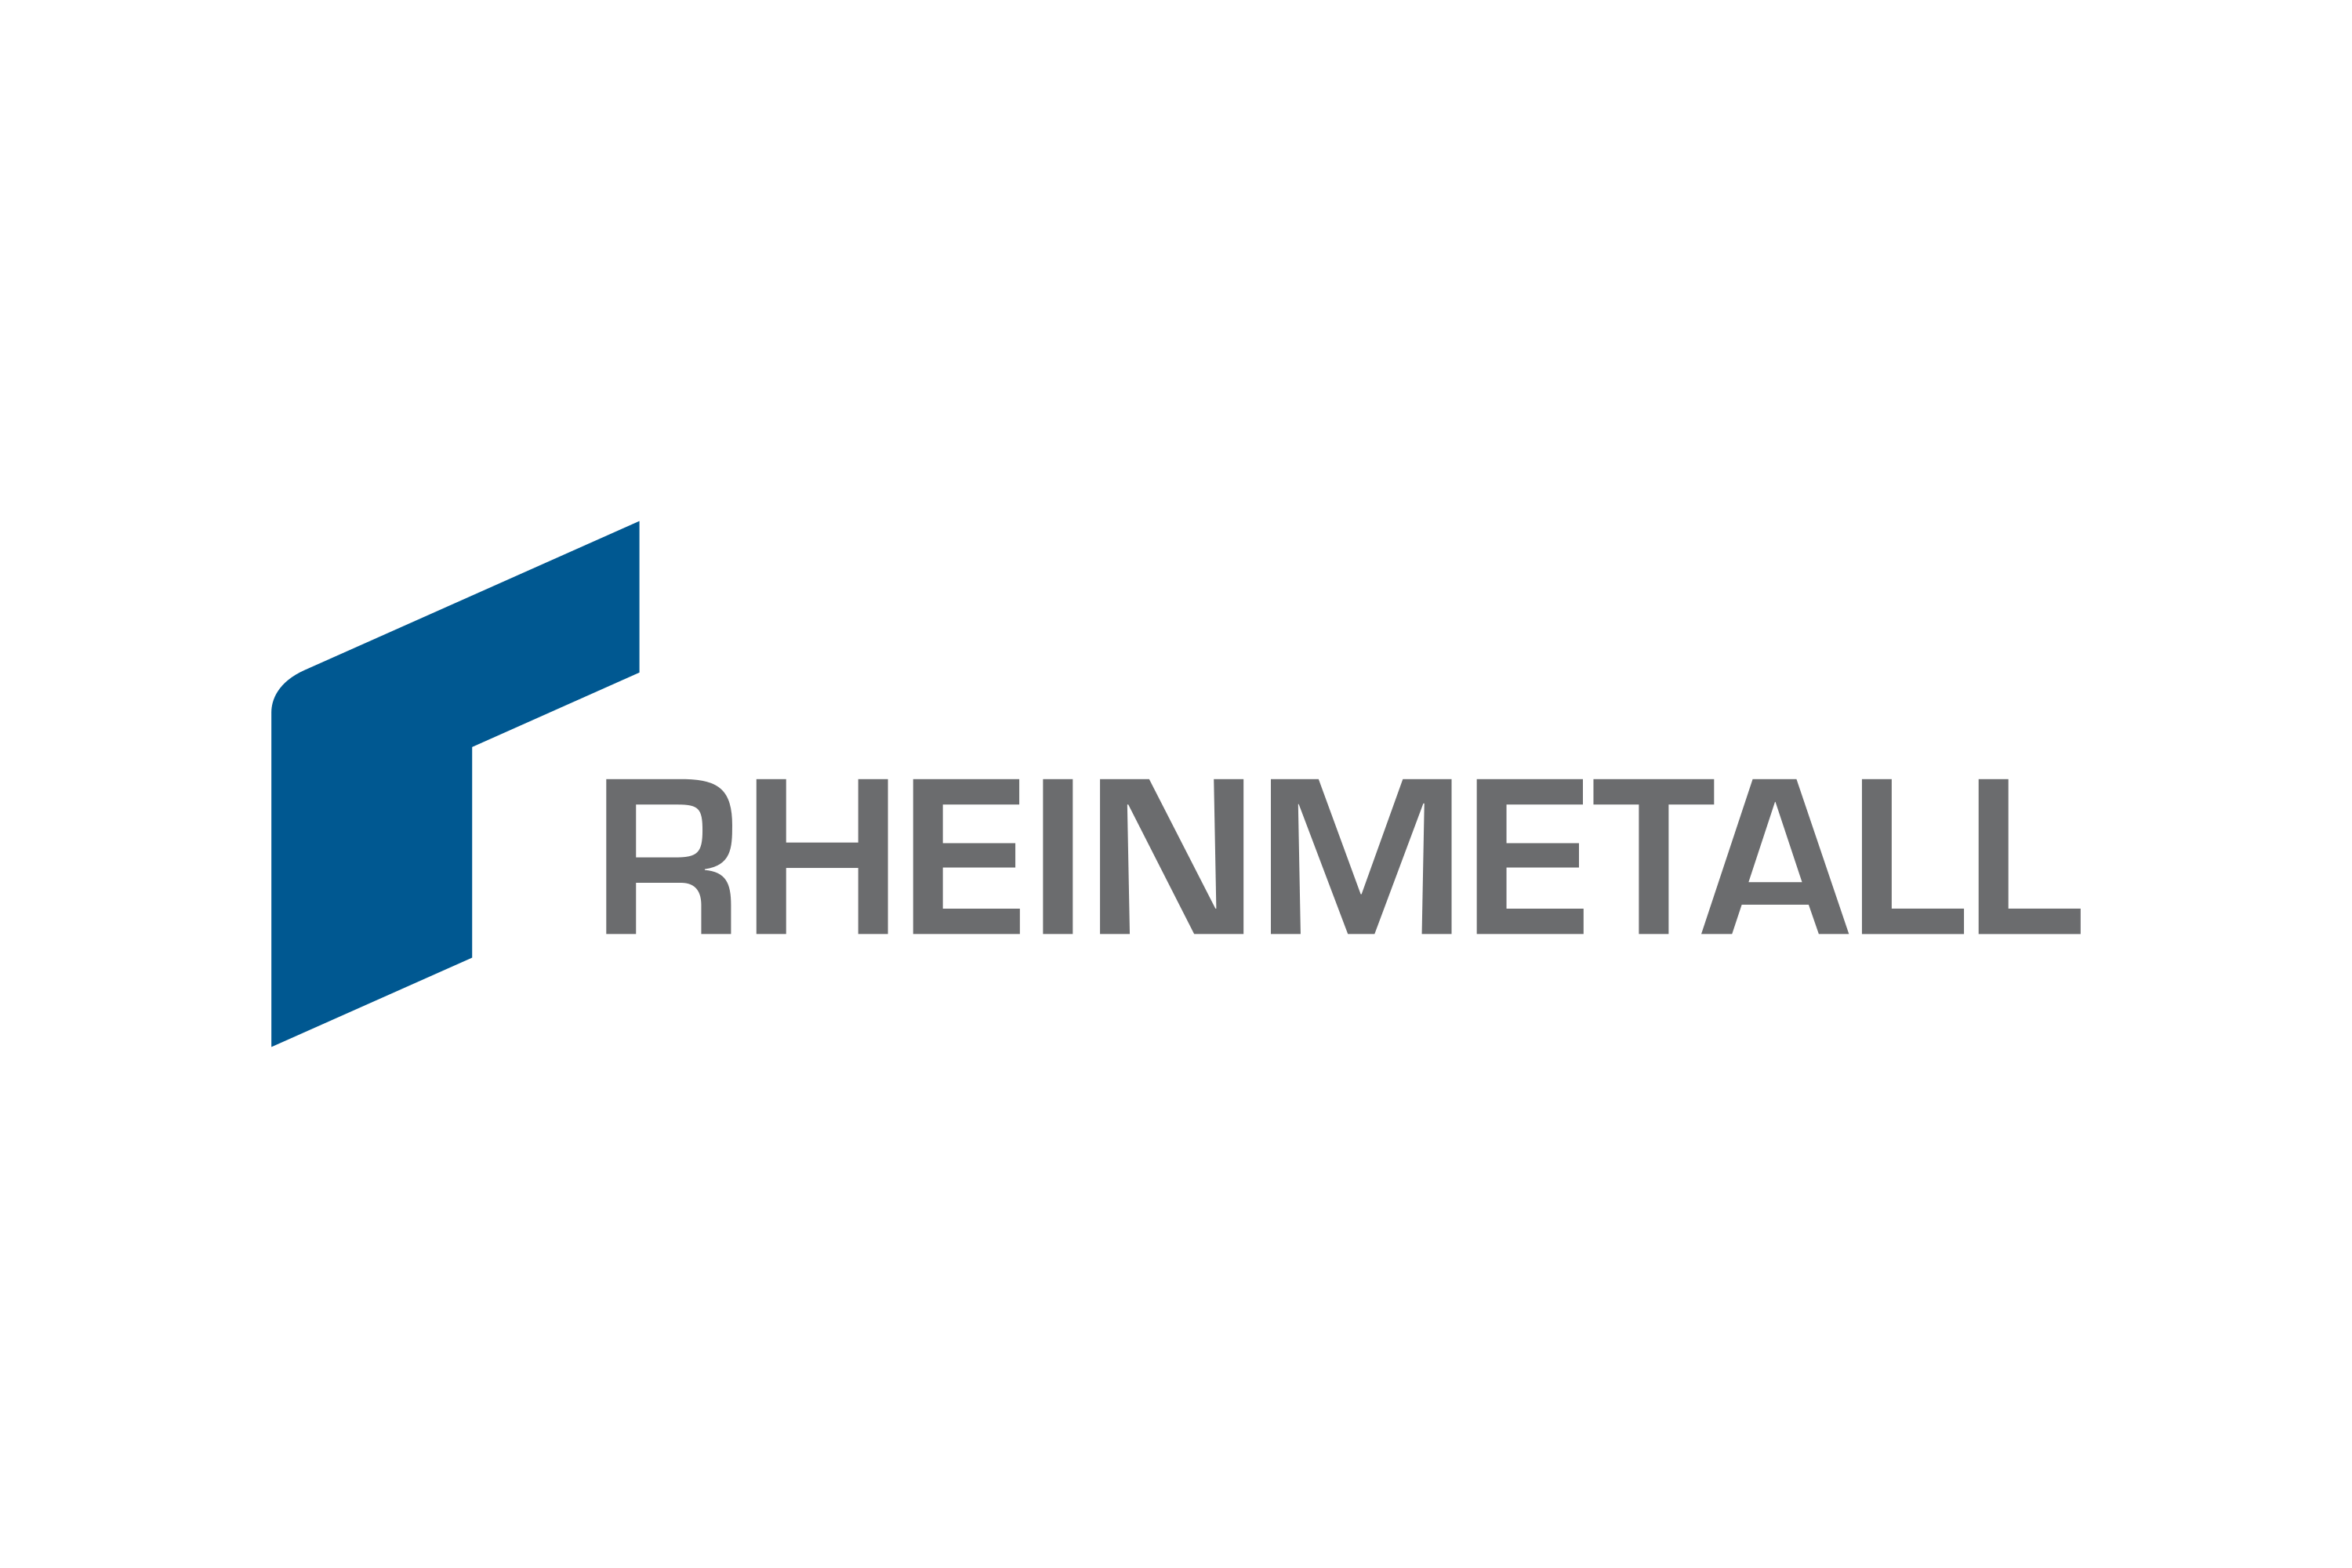 Download Rheinmetall Algeria Logo in SVG Vector or PNG File Format